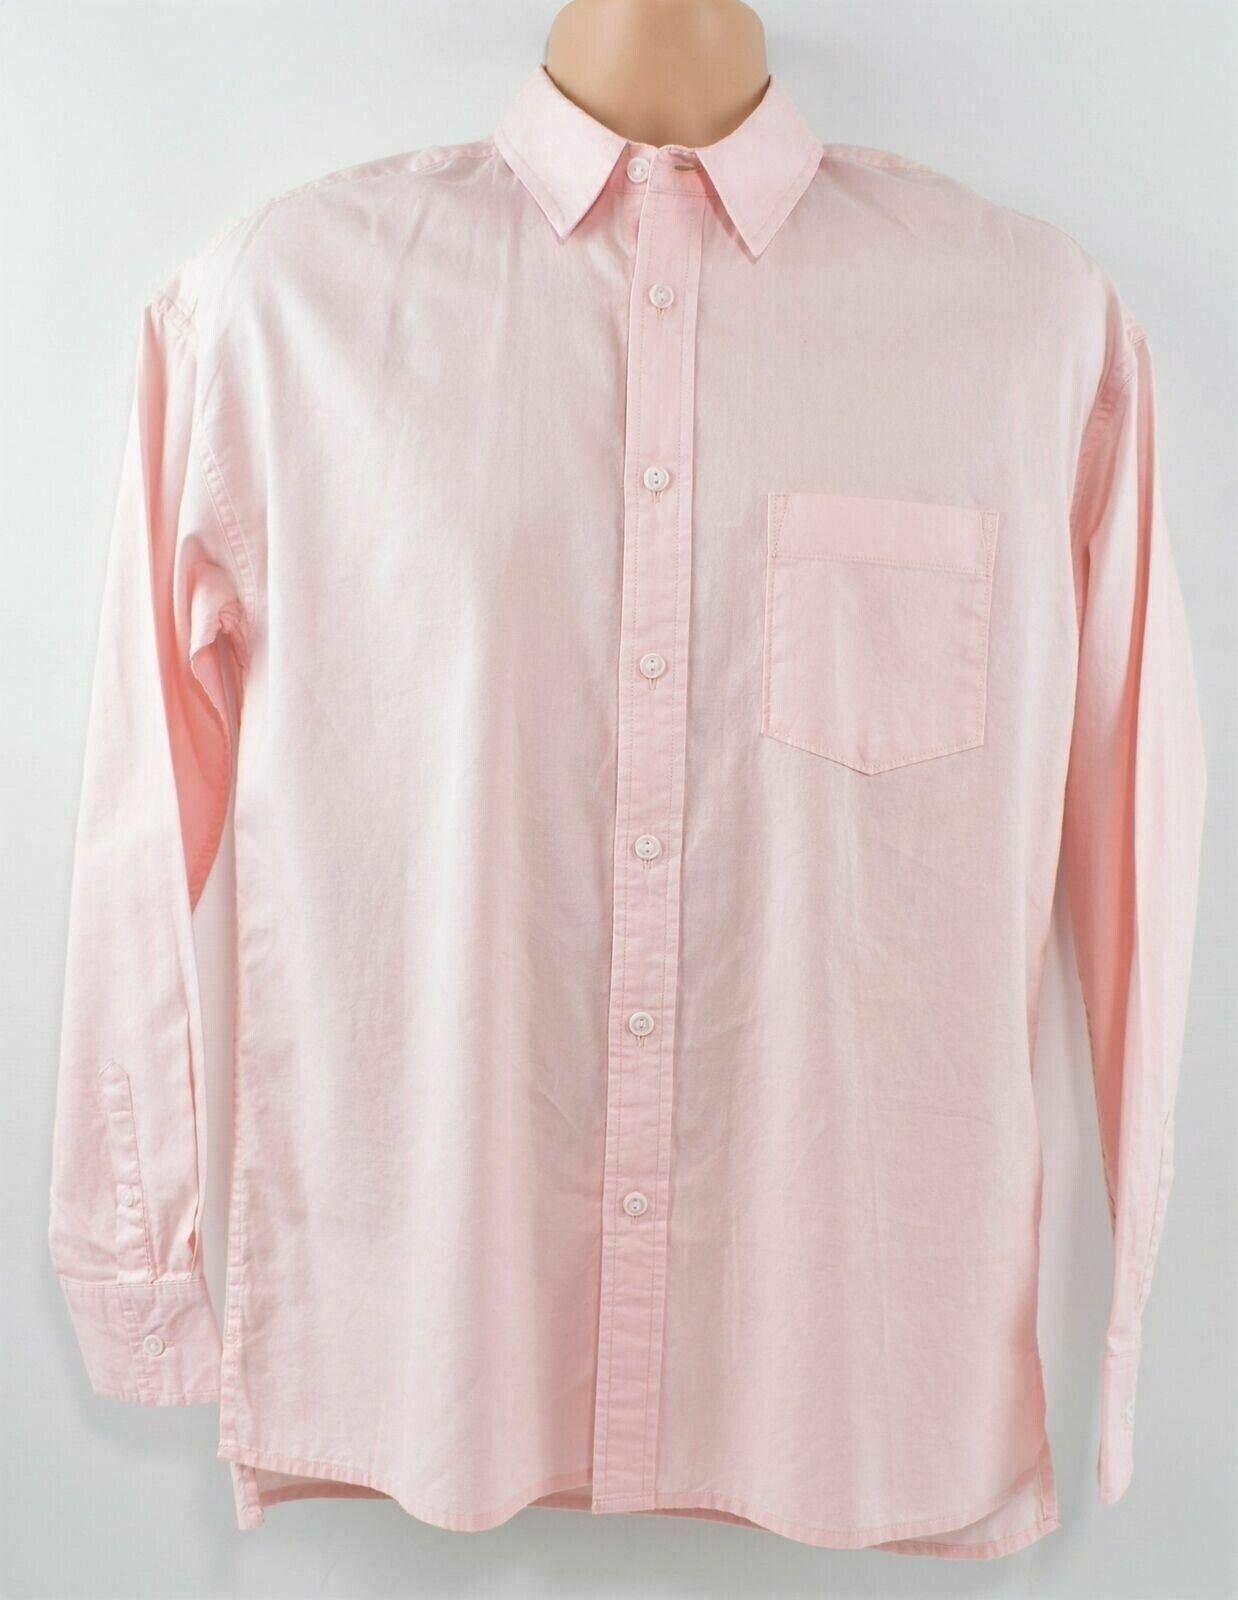 TOPMAN Men's Long Sleeved Casual Shirt, Pastel Pink, size S